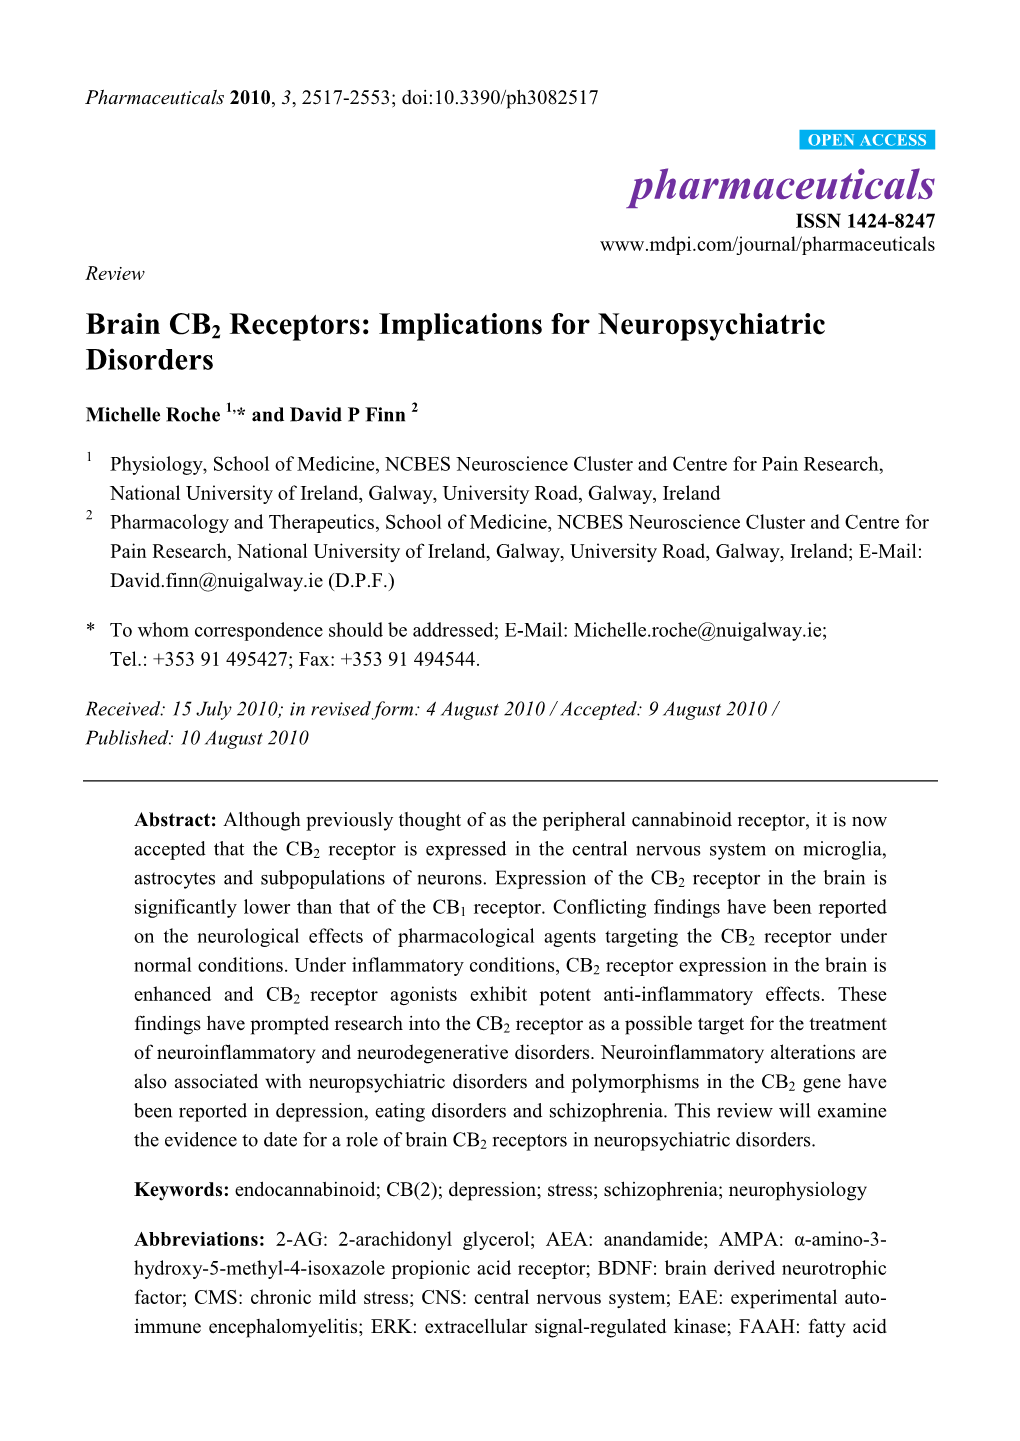 Brain CB2 Receptors: Implications for Neuropsychiatric Disorders